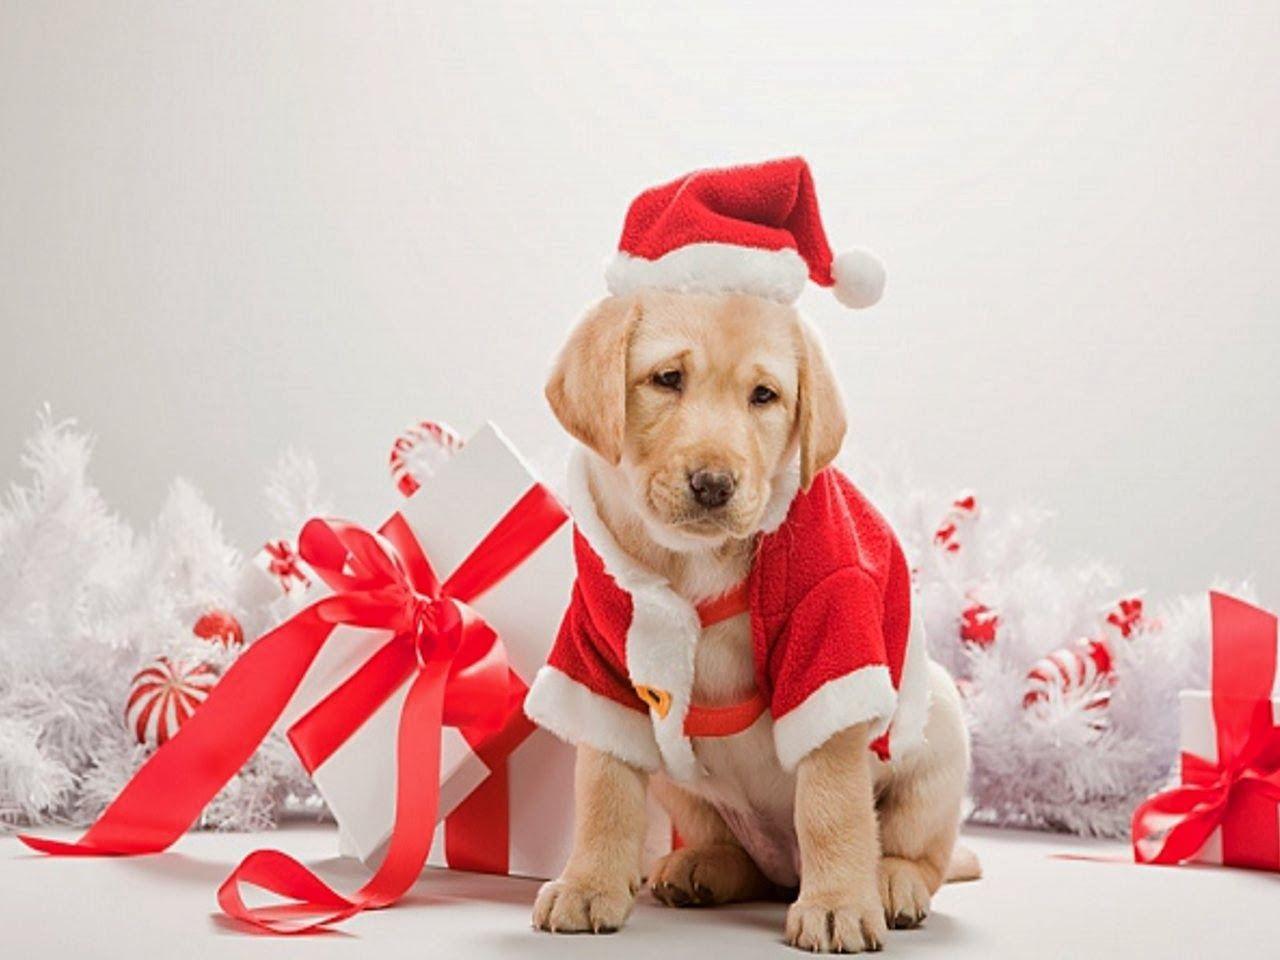 Cute Christmas Dog Wallpaper 2014. Christmas puppy, Christmas dog, Dog christmas gifts